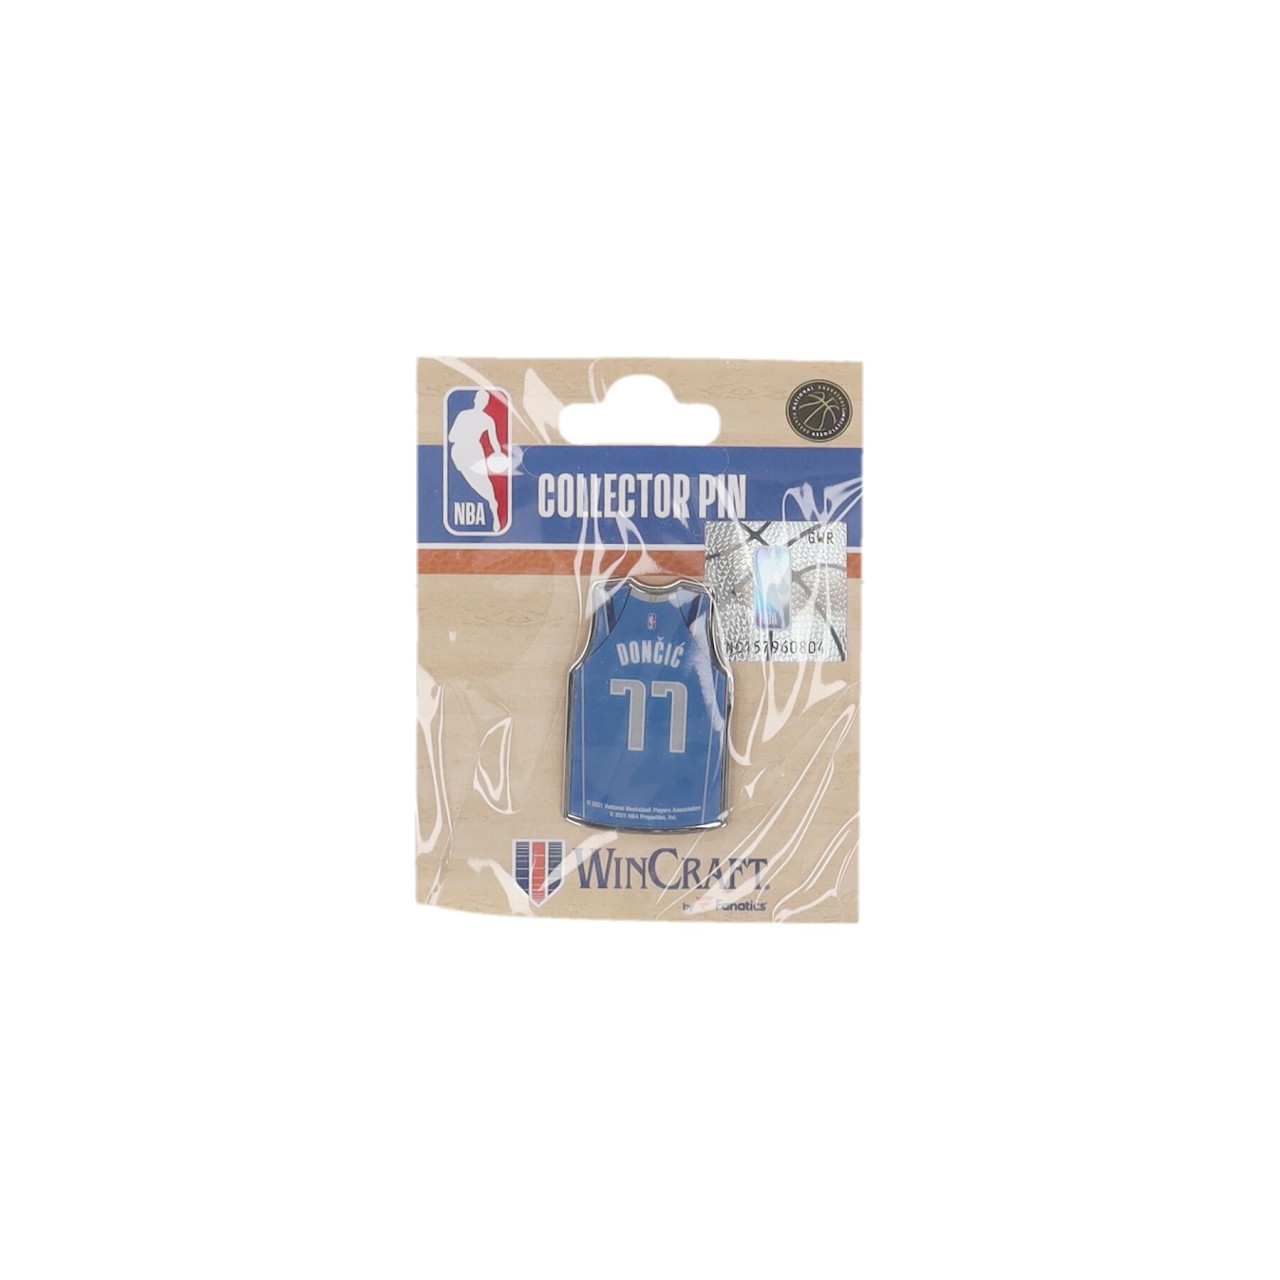 WINCRAFT NBA COLLECTOR PIN NO 77 LUKA DONCIC DALMAV 44159321